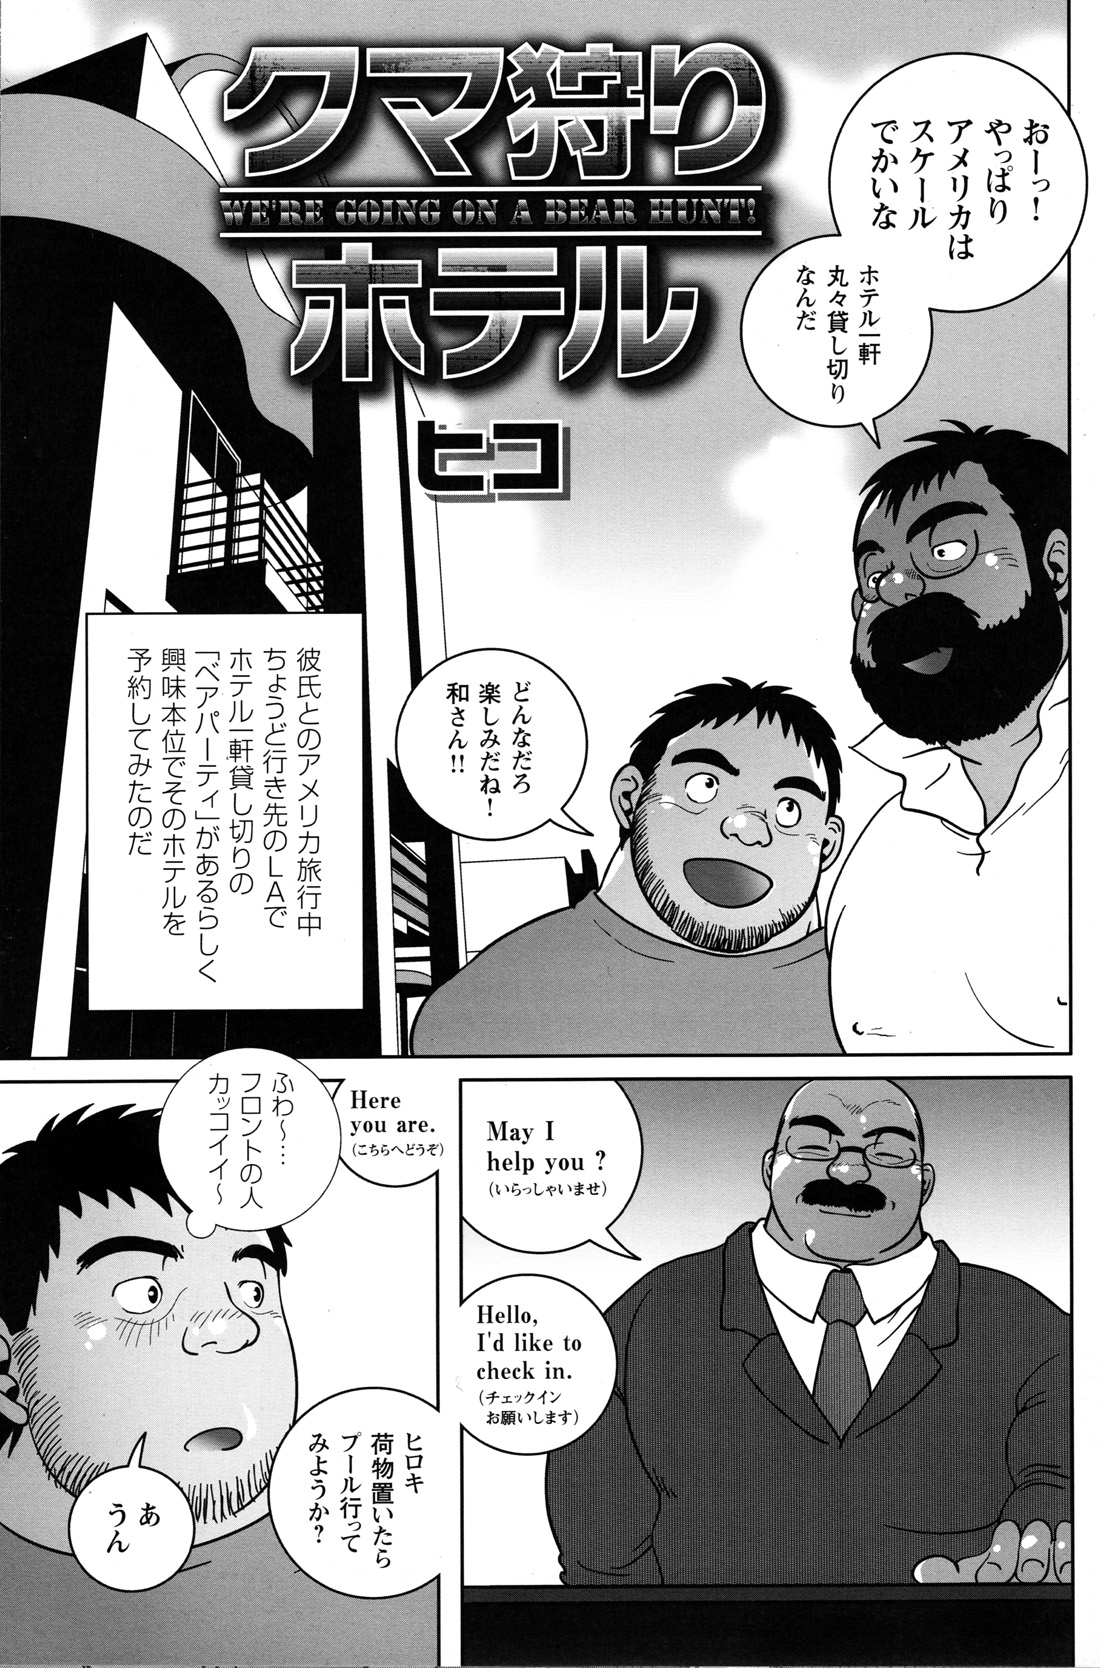 Comic G-men Gaho No.04 